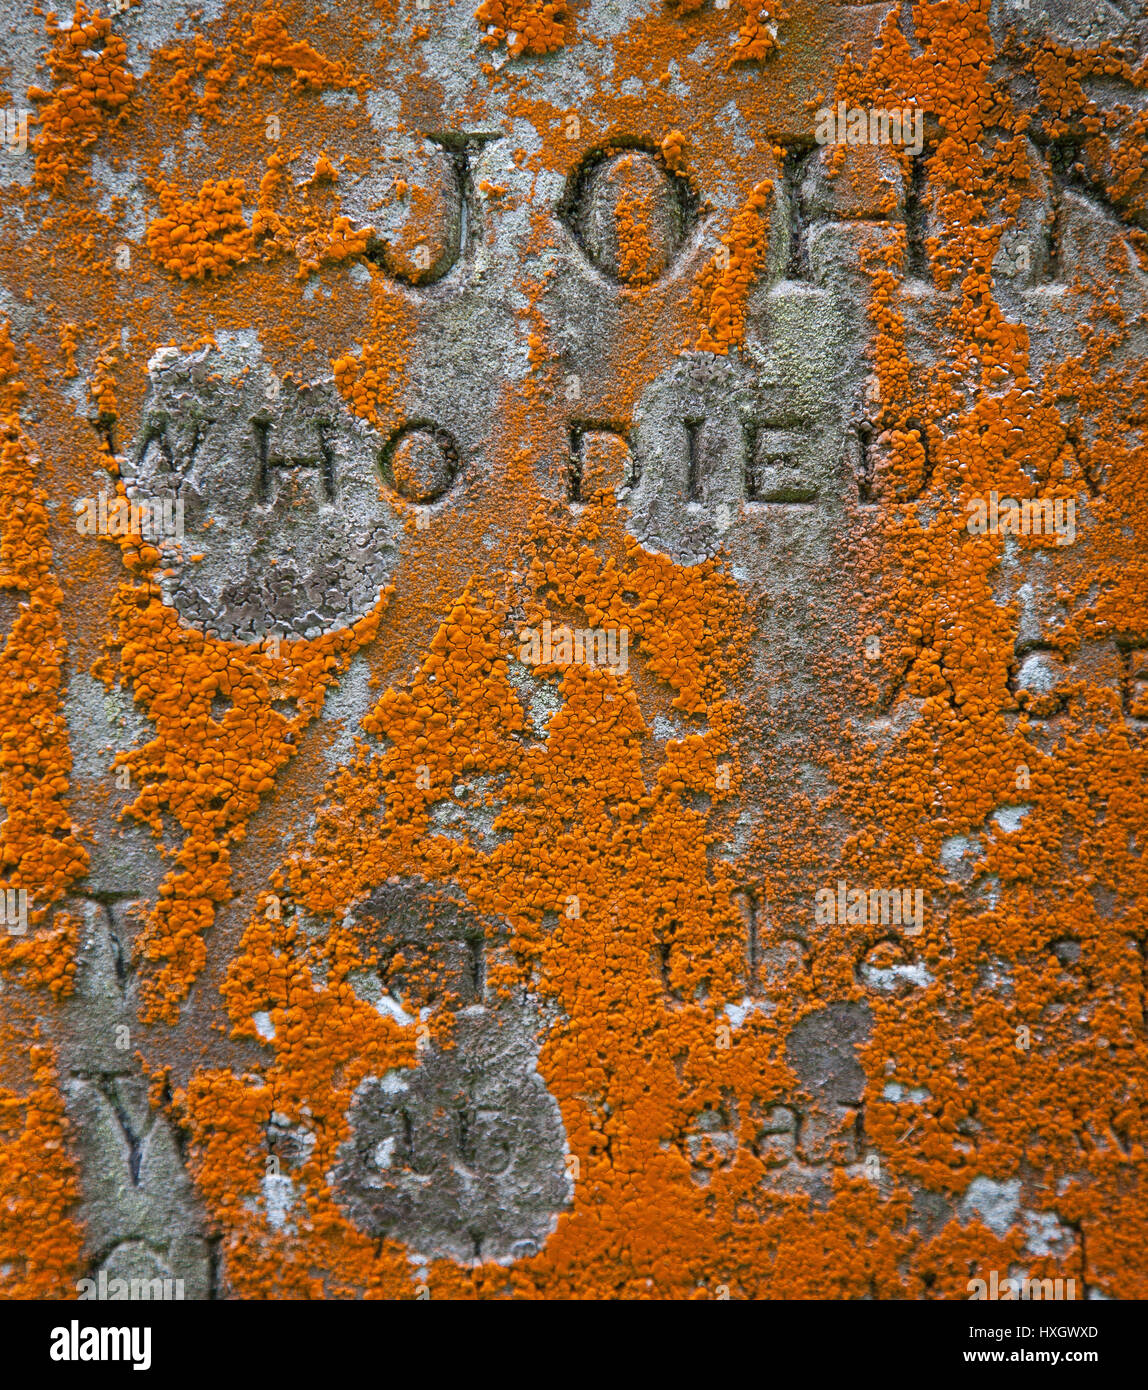 Orange crustose lichen encrusting the face of a gravestone in an English churchyard Stock Photo